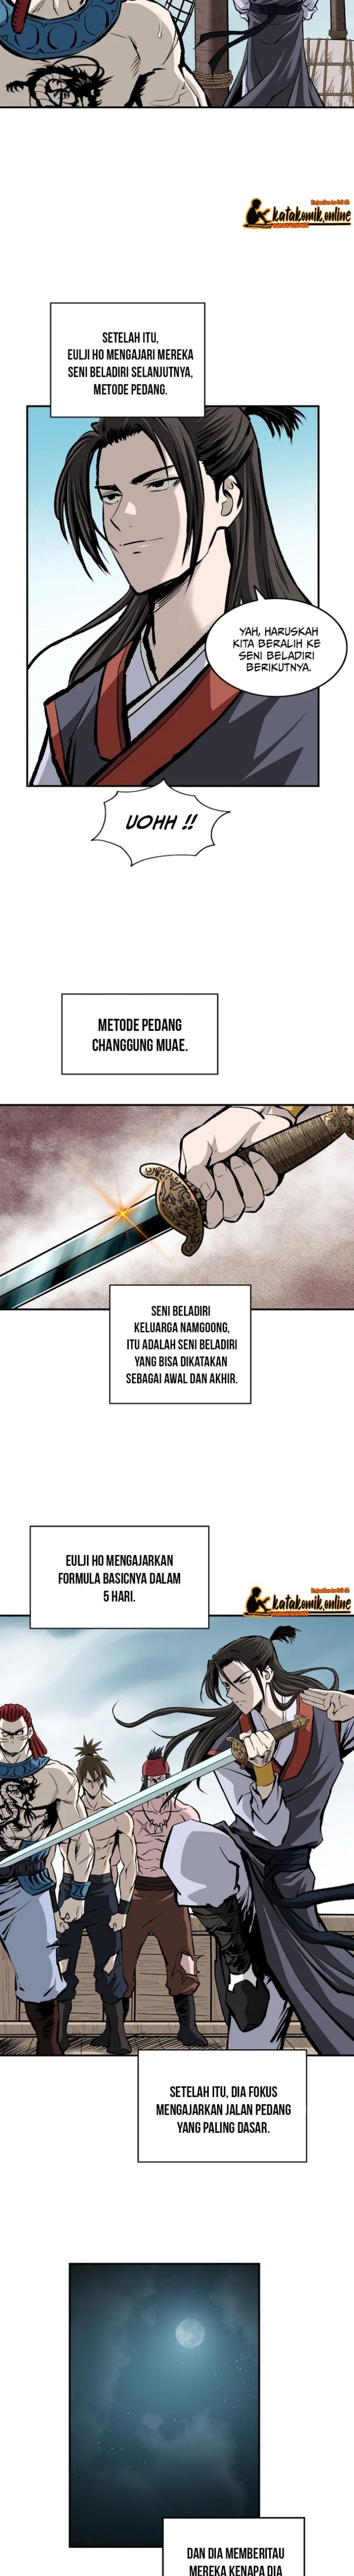 Archer Sword God : Descendants Of The Archer Chapter 08 - 149